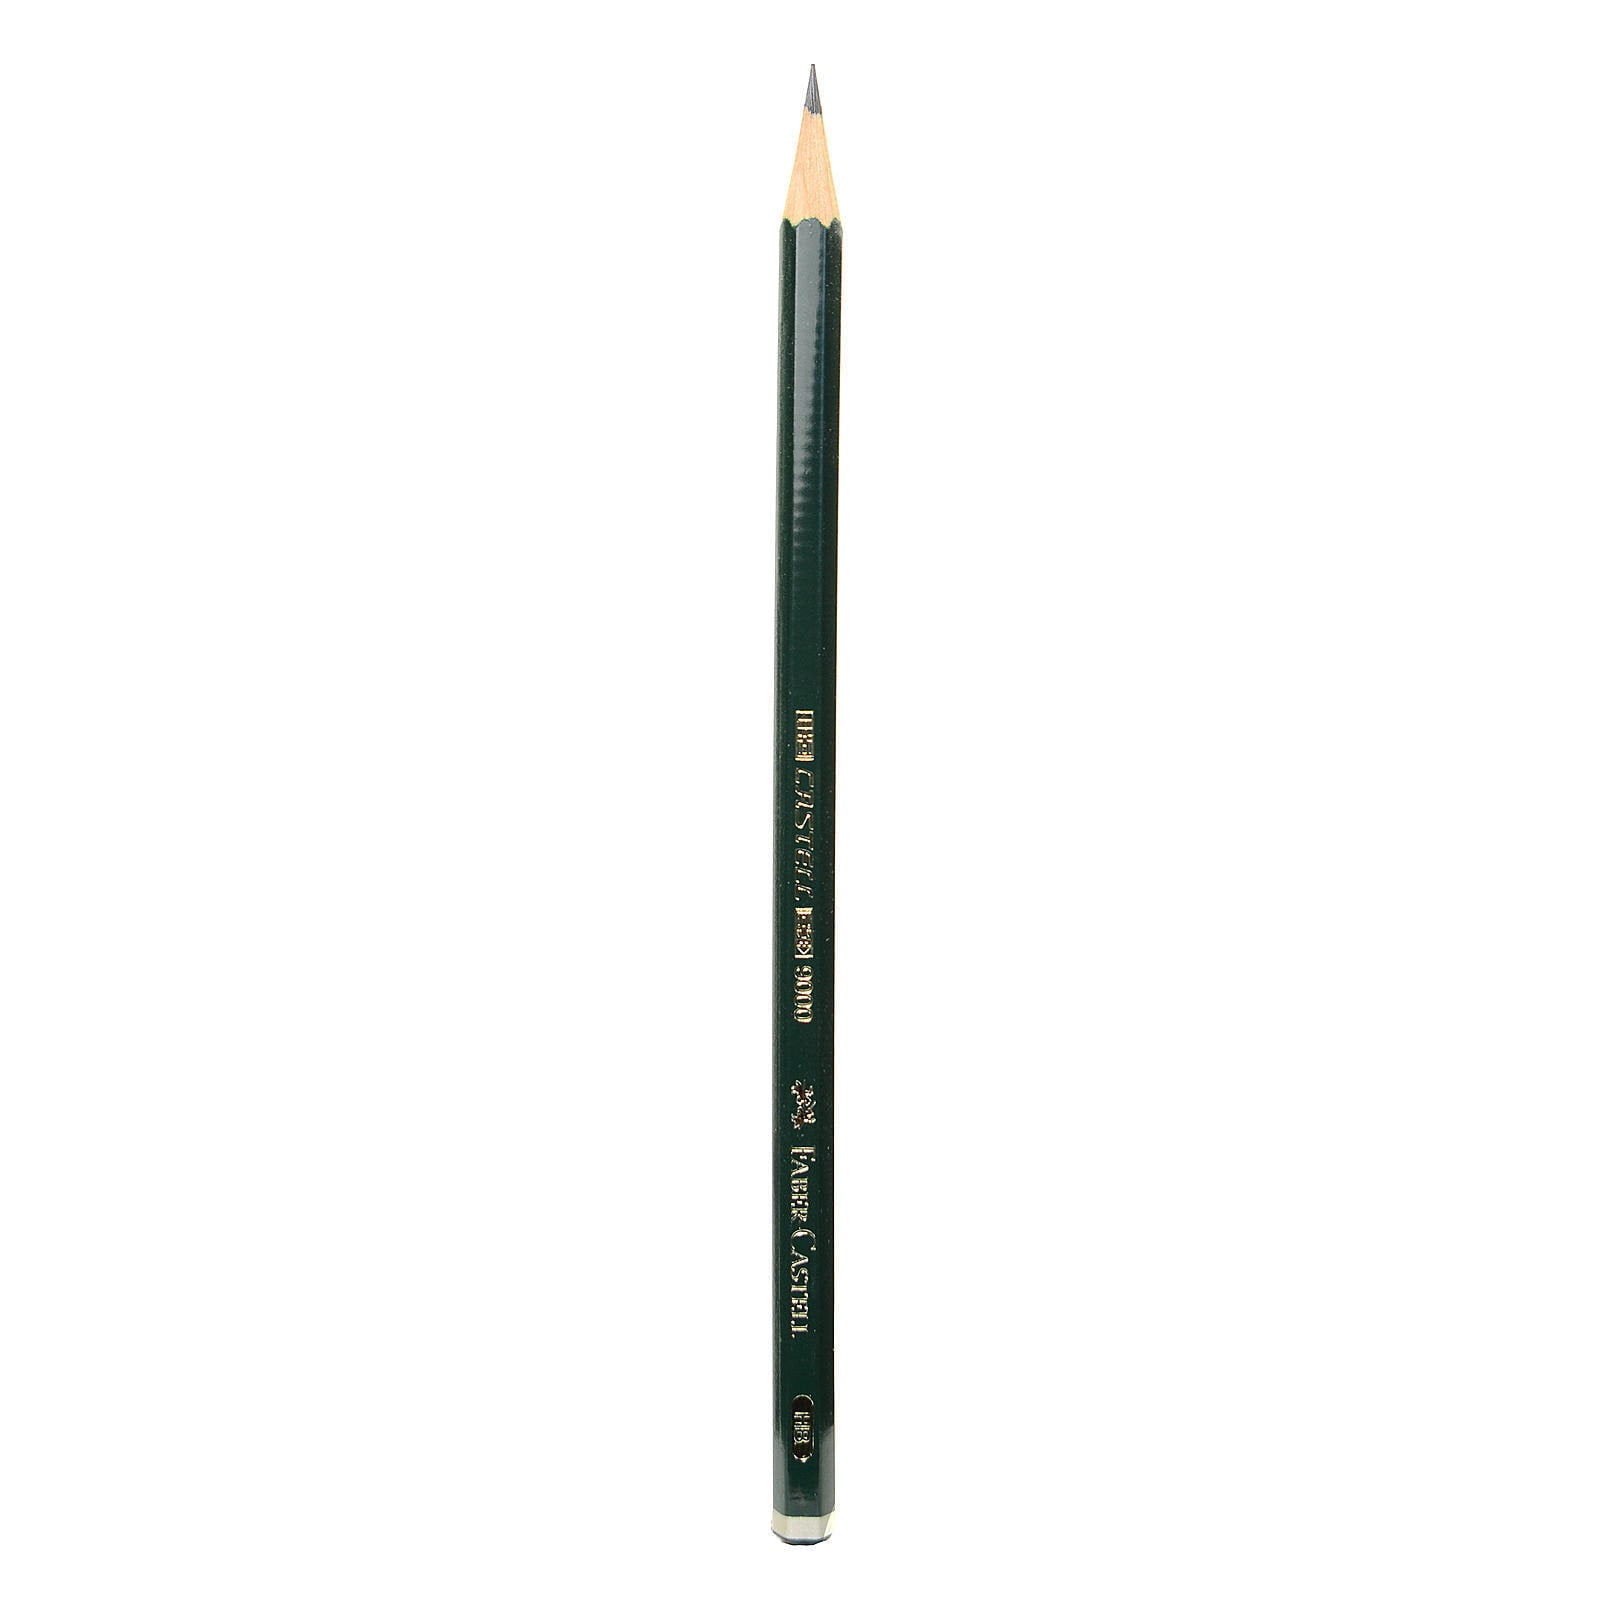 Quality Mono Art Lead Sketching Pencils 12 pack Mix (5H to 7B), Basics.pk